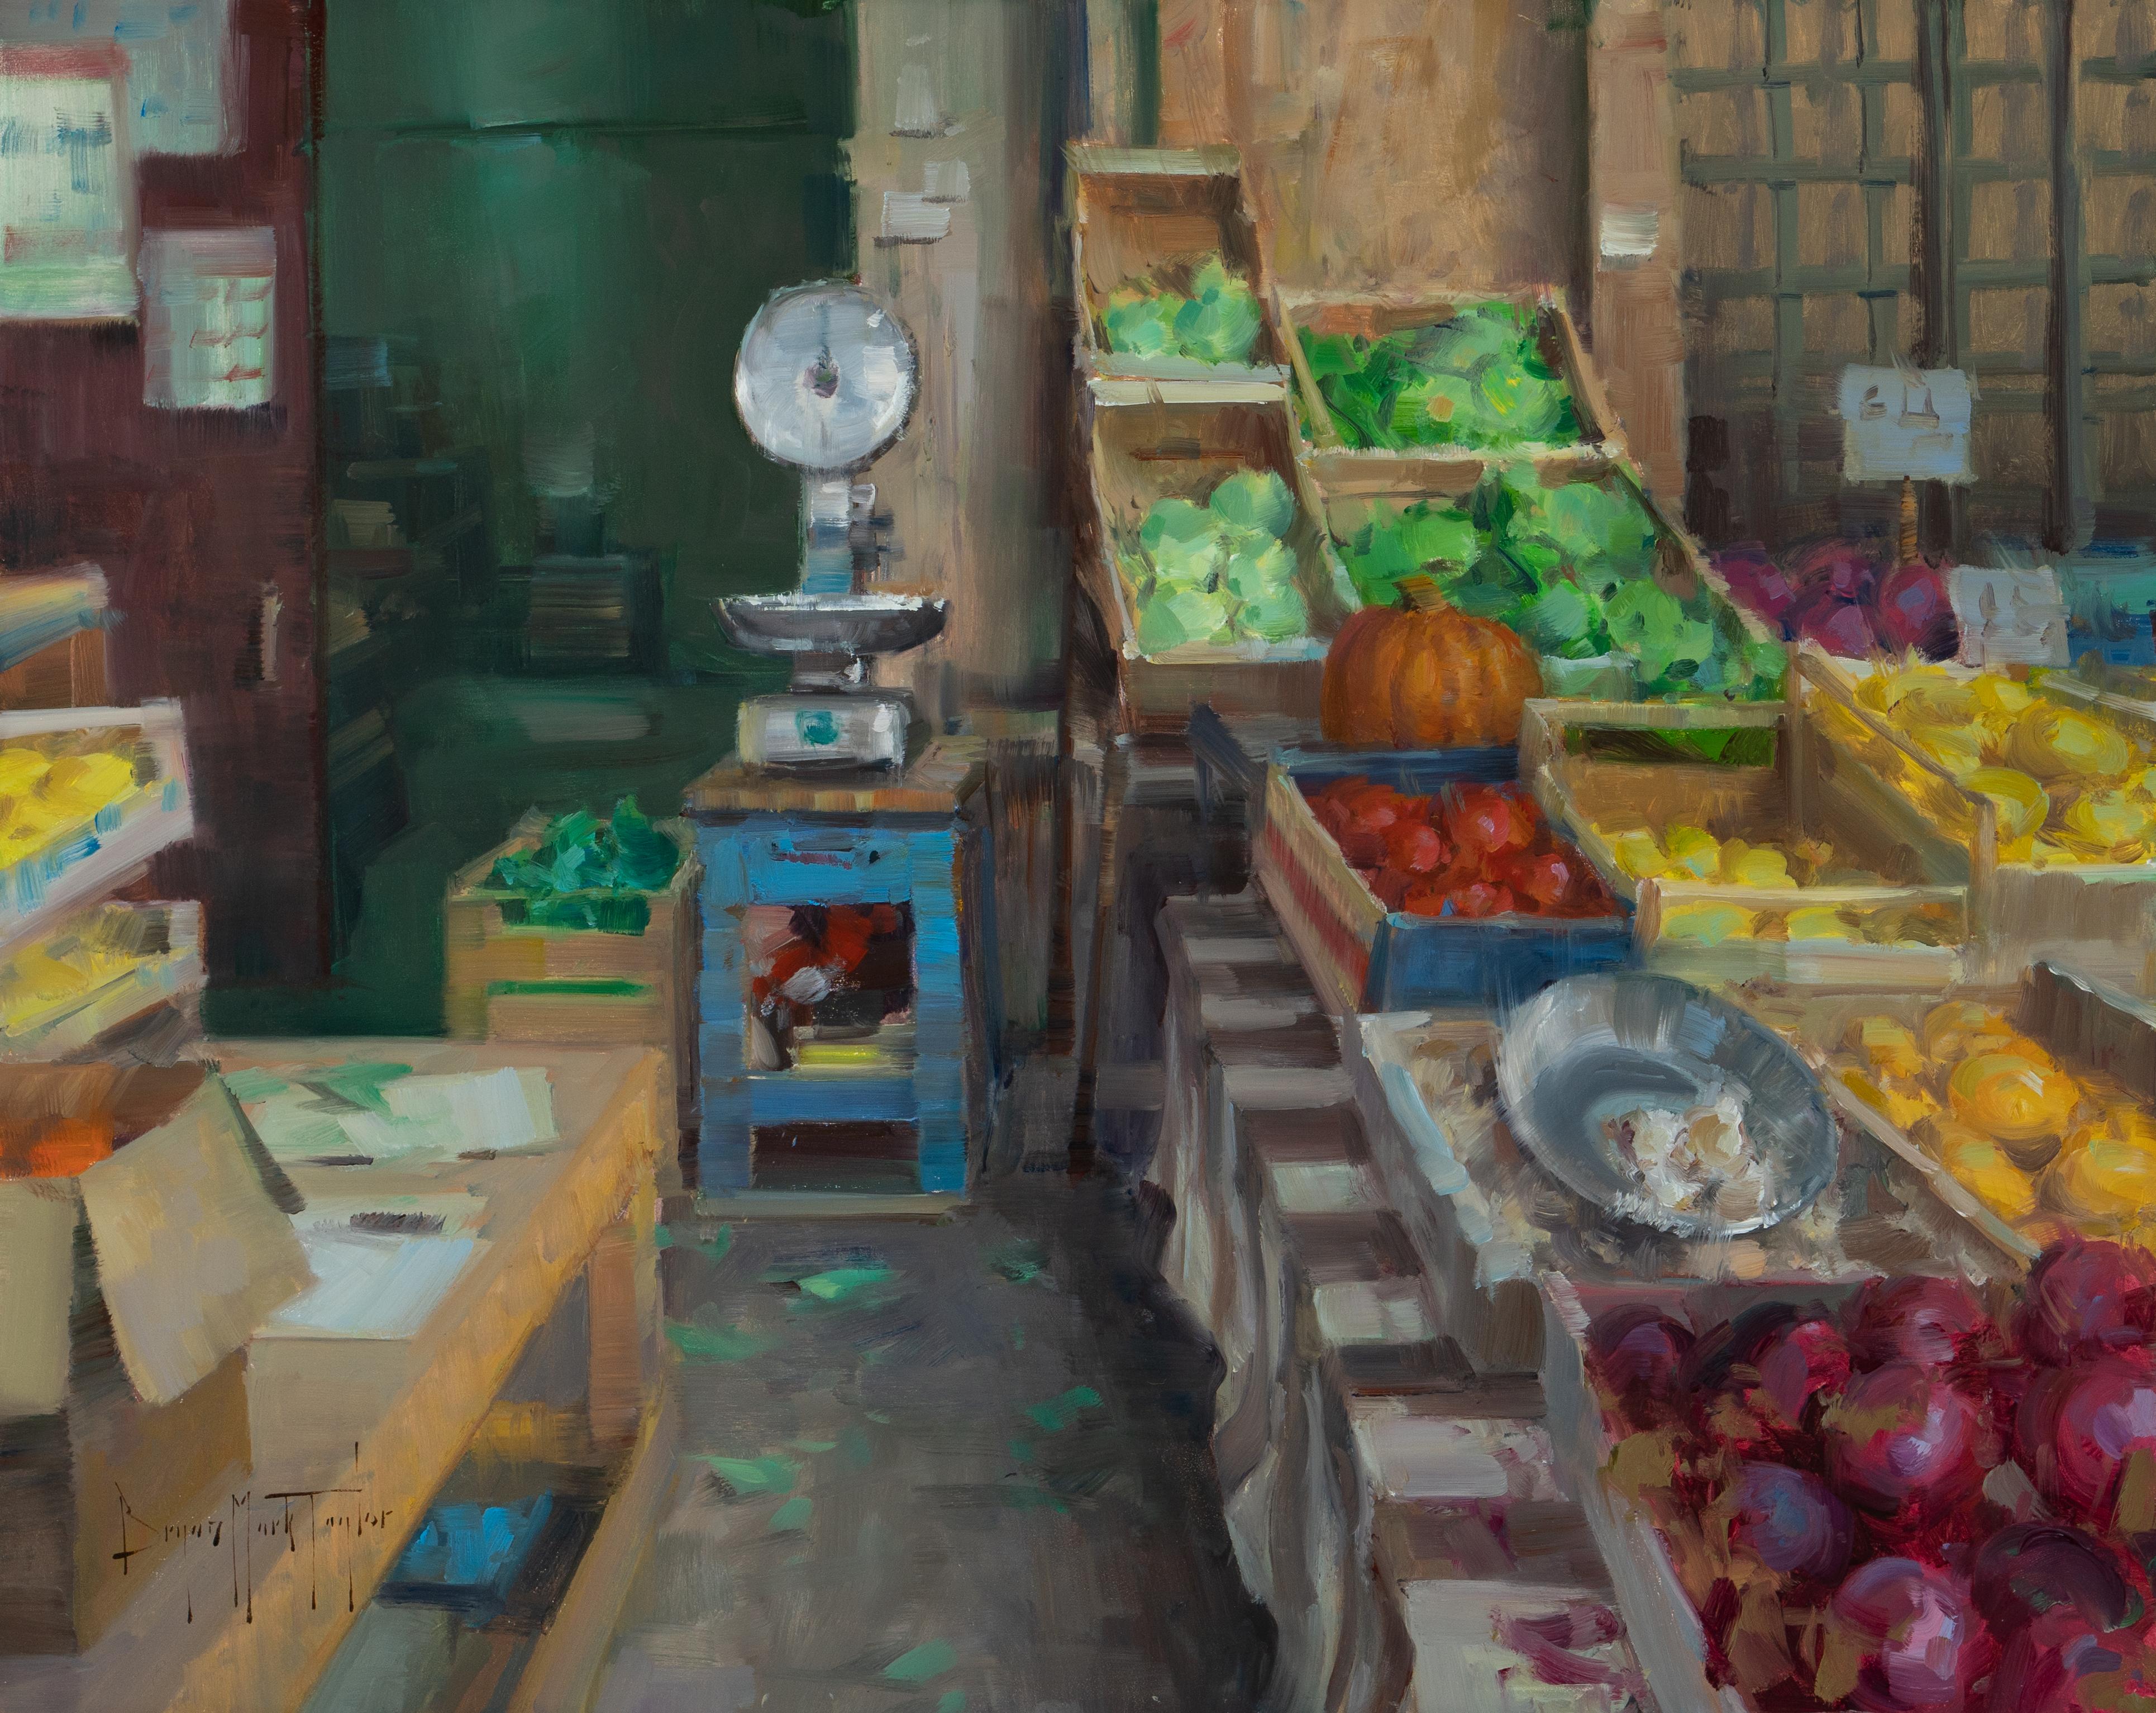 Bryan Mark Taylor Figurative Painting - "Vintage Produce Market" Oil Painting